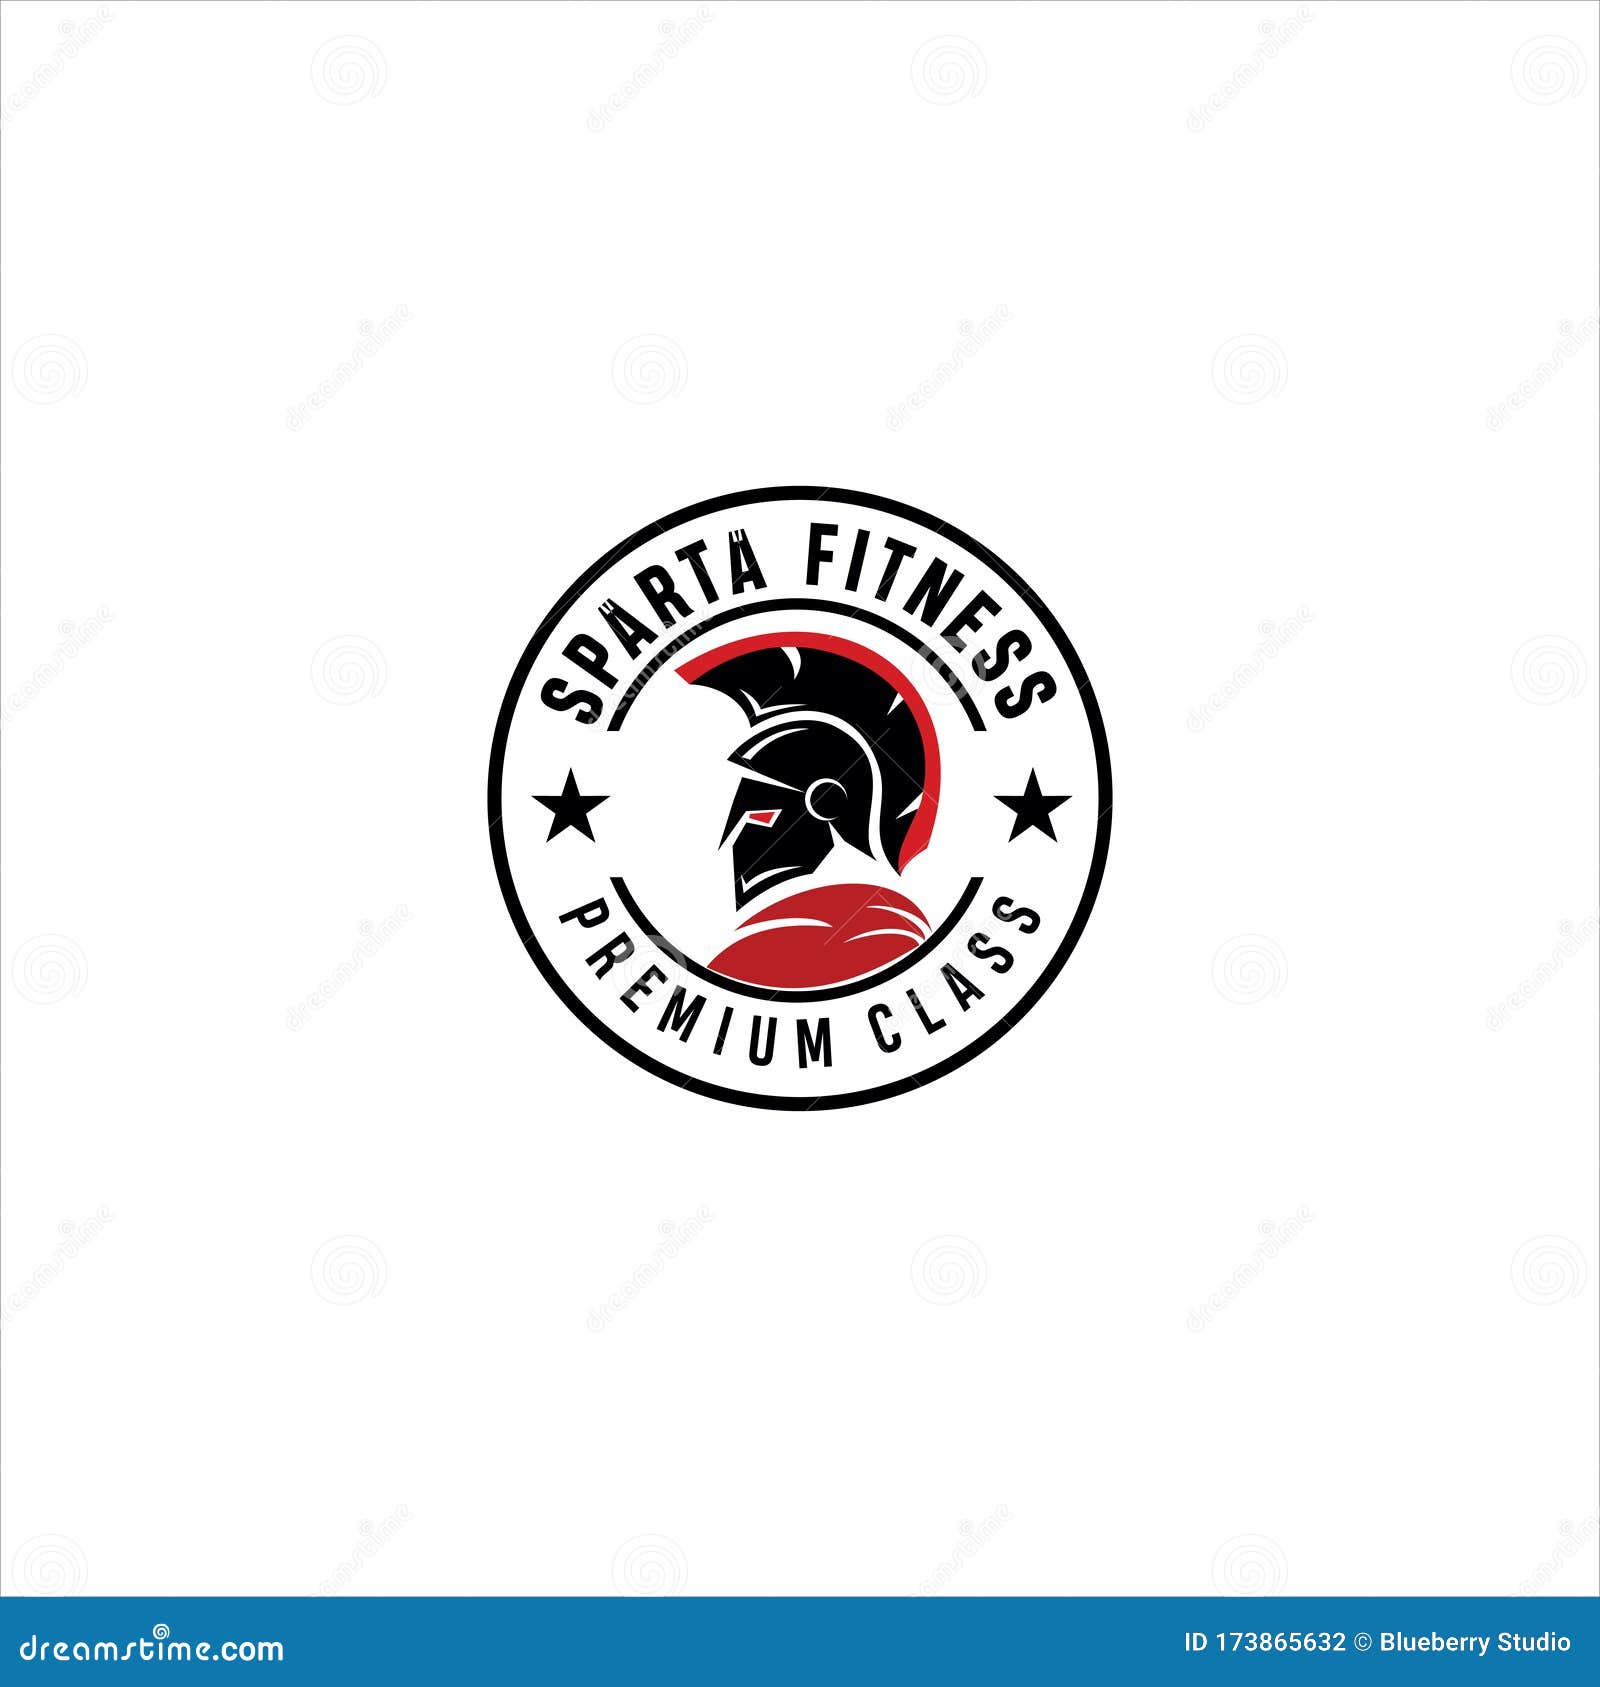 spartan fitness logo  . gym spartanlogo  . fitness logo . bodybuilding logo  inspiration . ironclad logo . warri